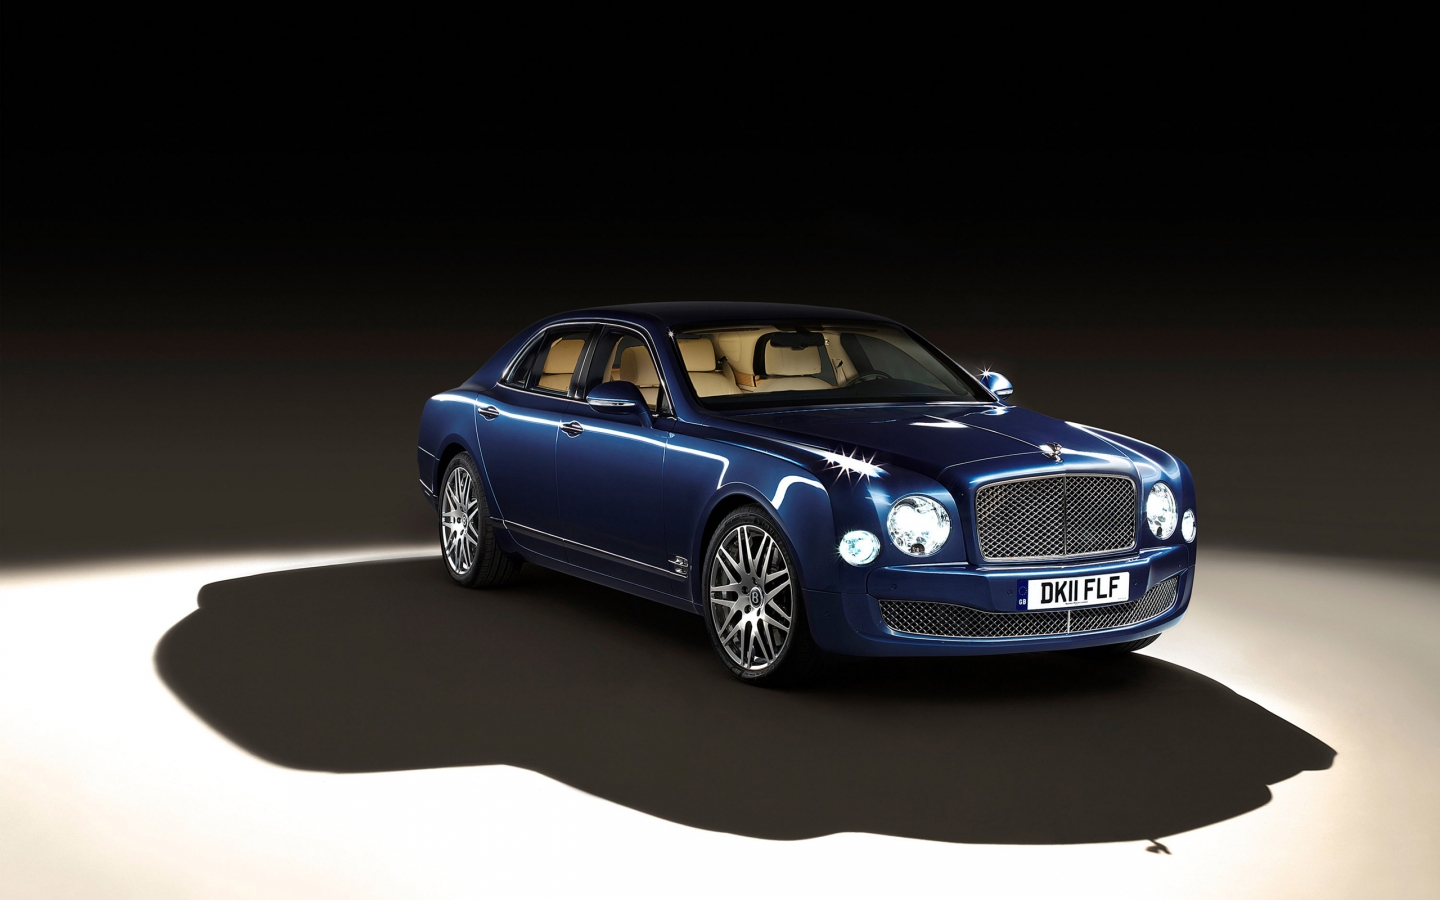 2012 Bentley Mulsanne Executive for 1440 x 900 widescreen resolution